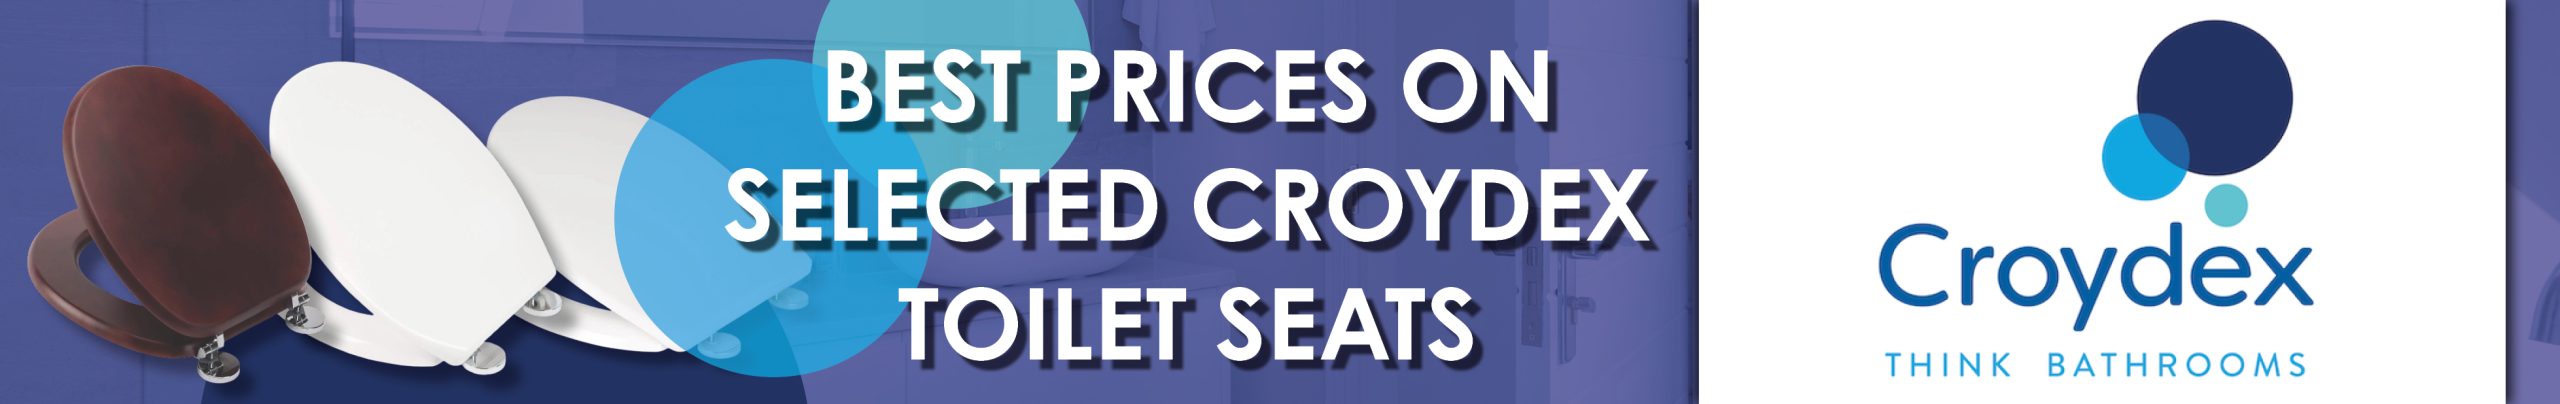 Croydex Toilet Seat Promo Banner